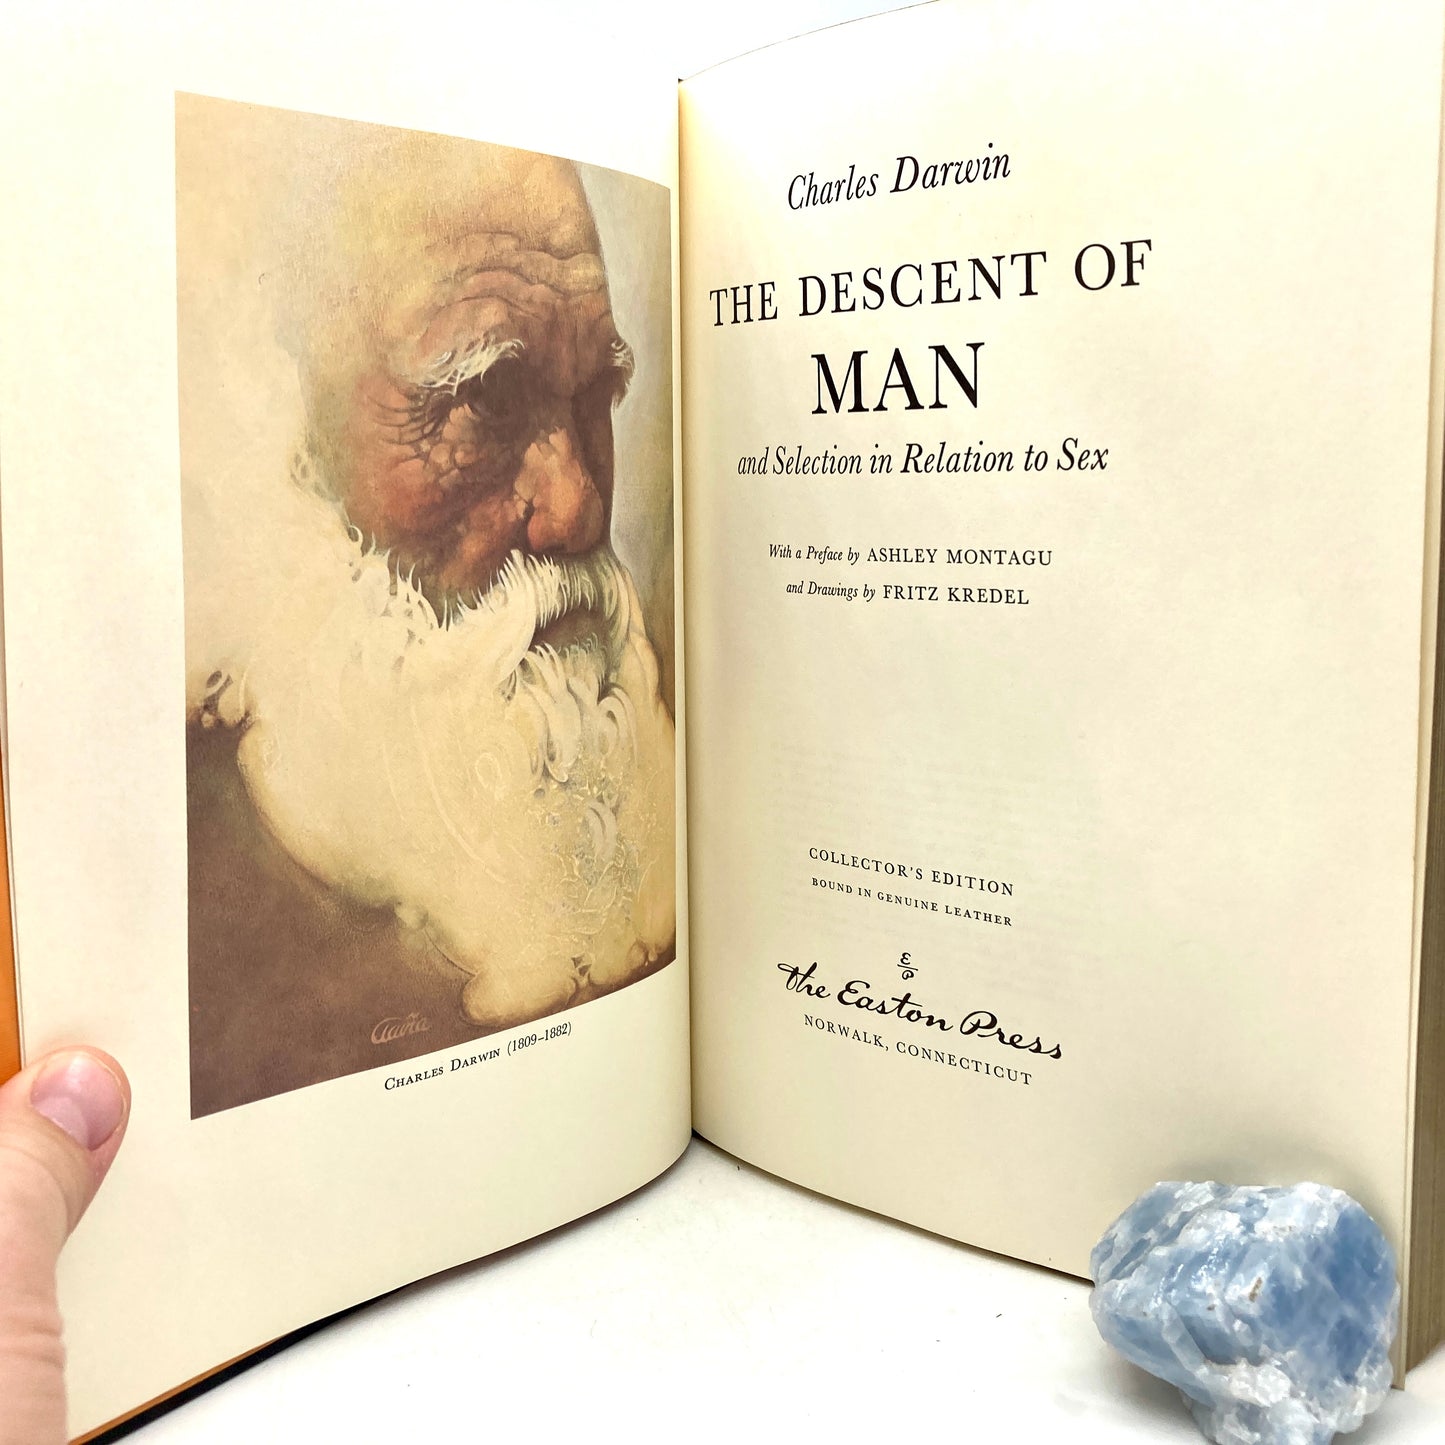 DARWIN, Charles "The Descent of Man" [Easton Press, 1979]